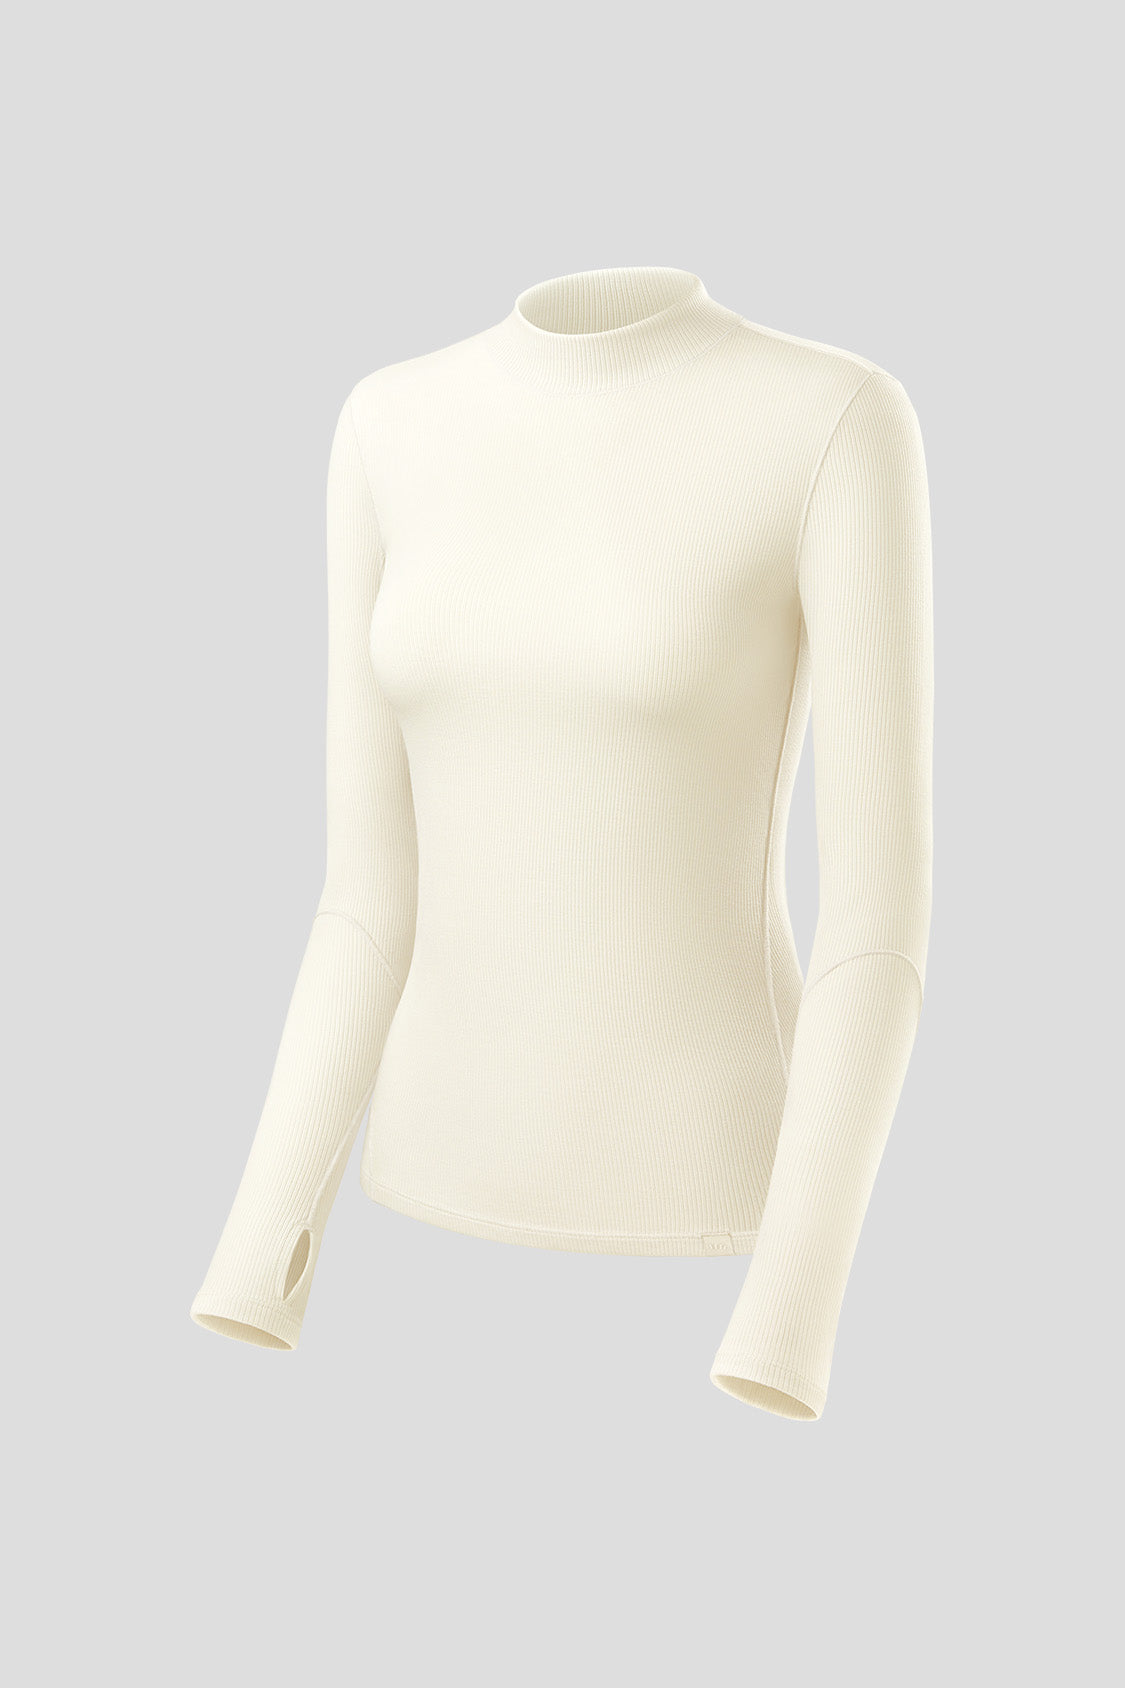 SSLR Turtleneck Thermal Shirts for Women Long Sleeve Tops Fleece Lined  Shirt Mock Neck Base Layer